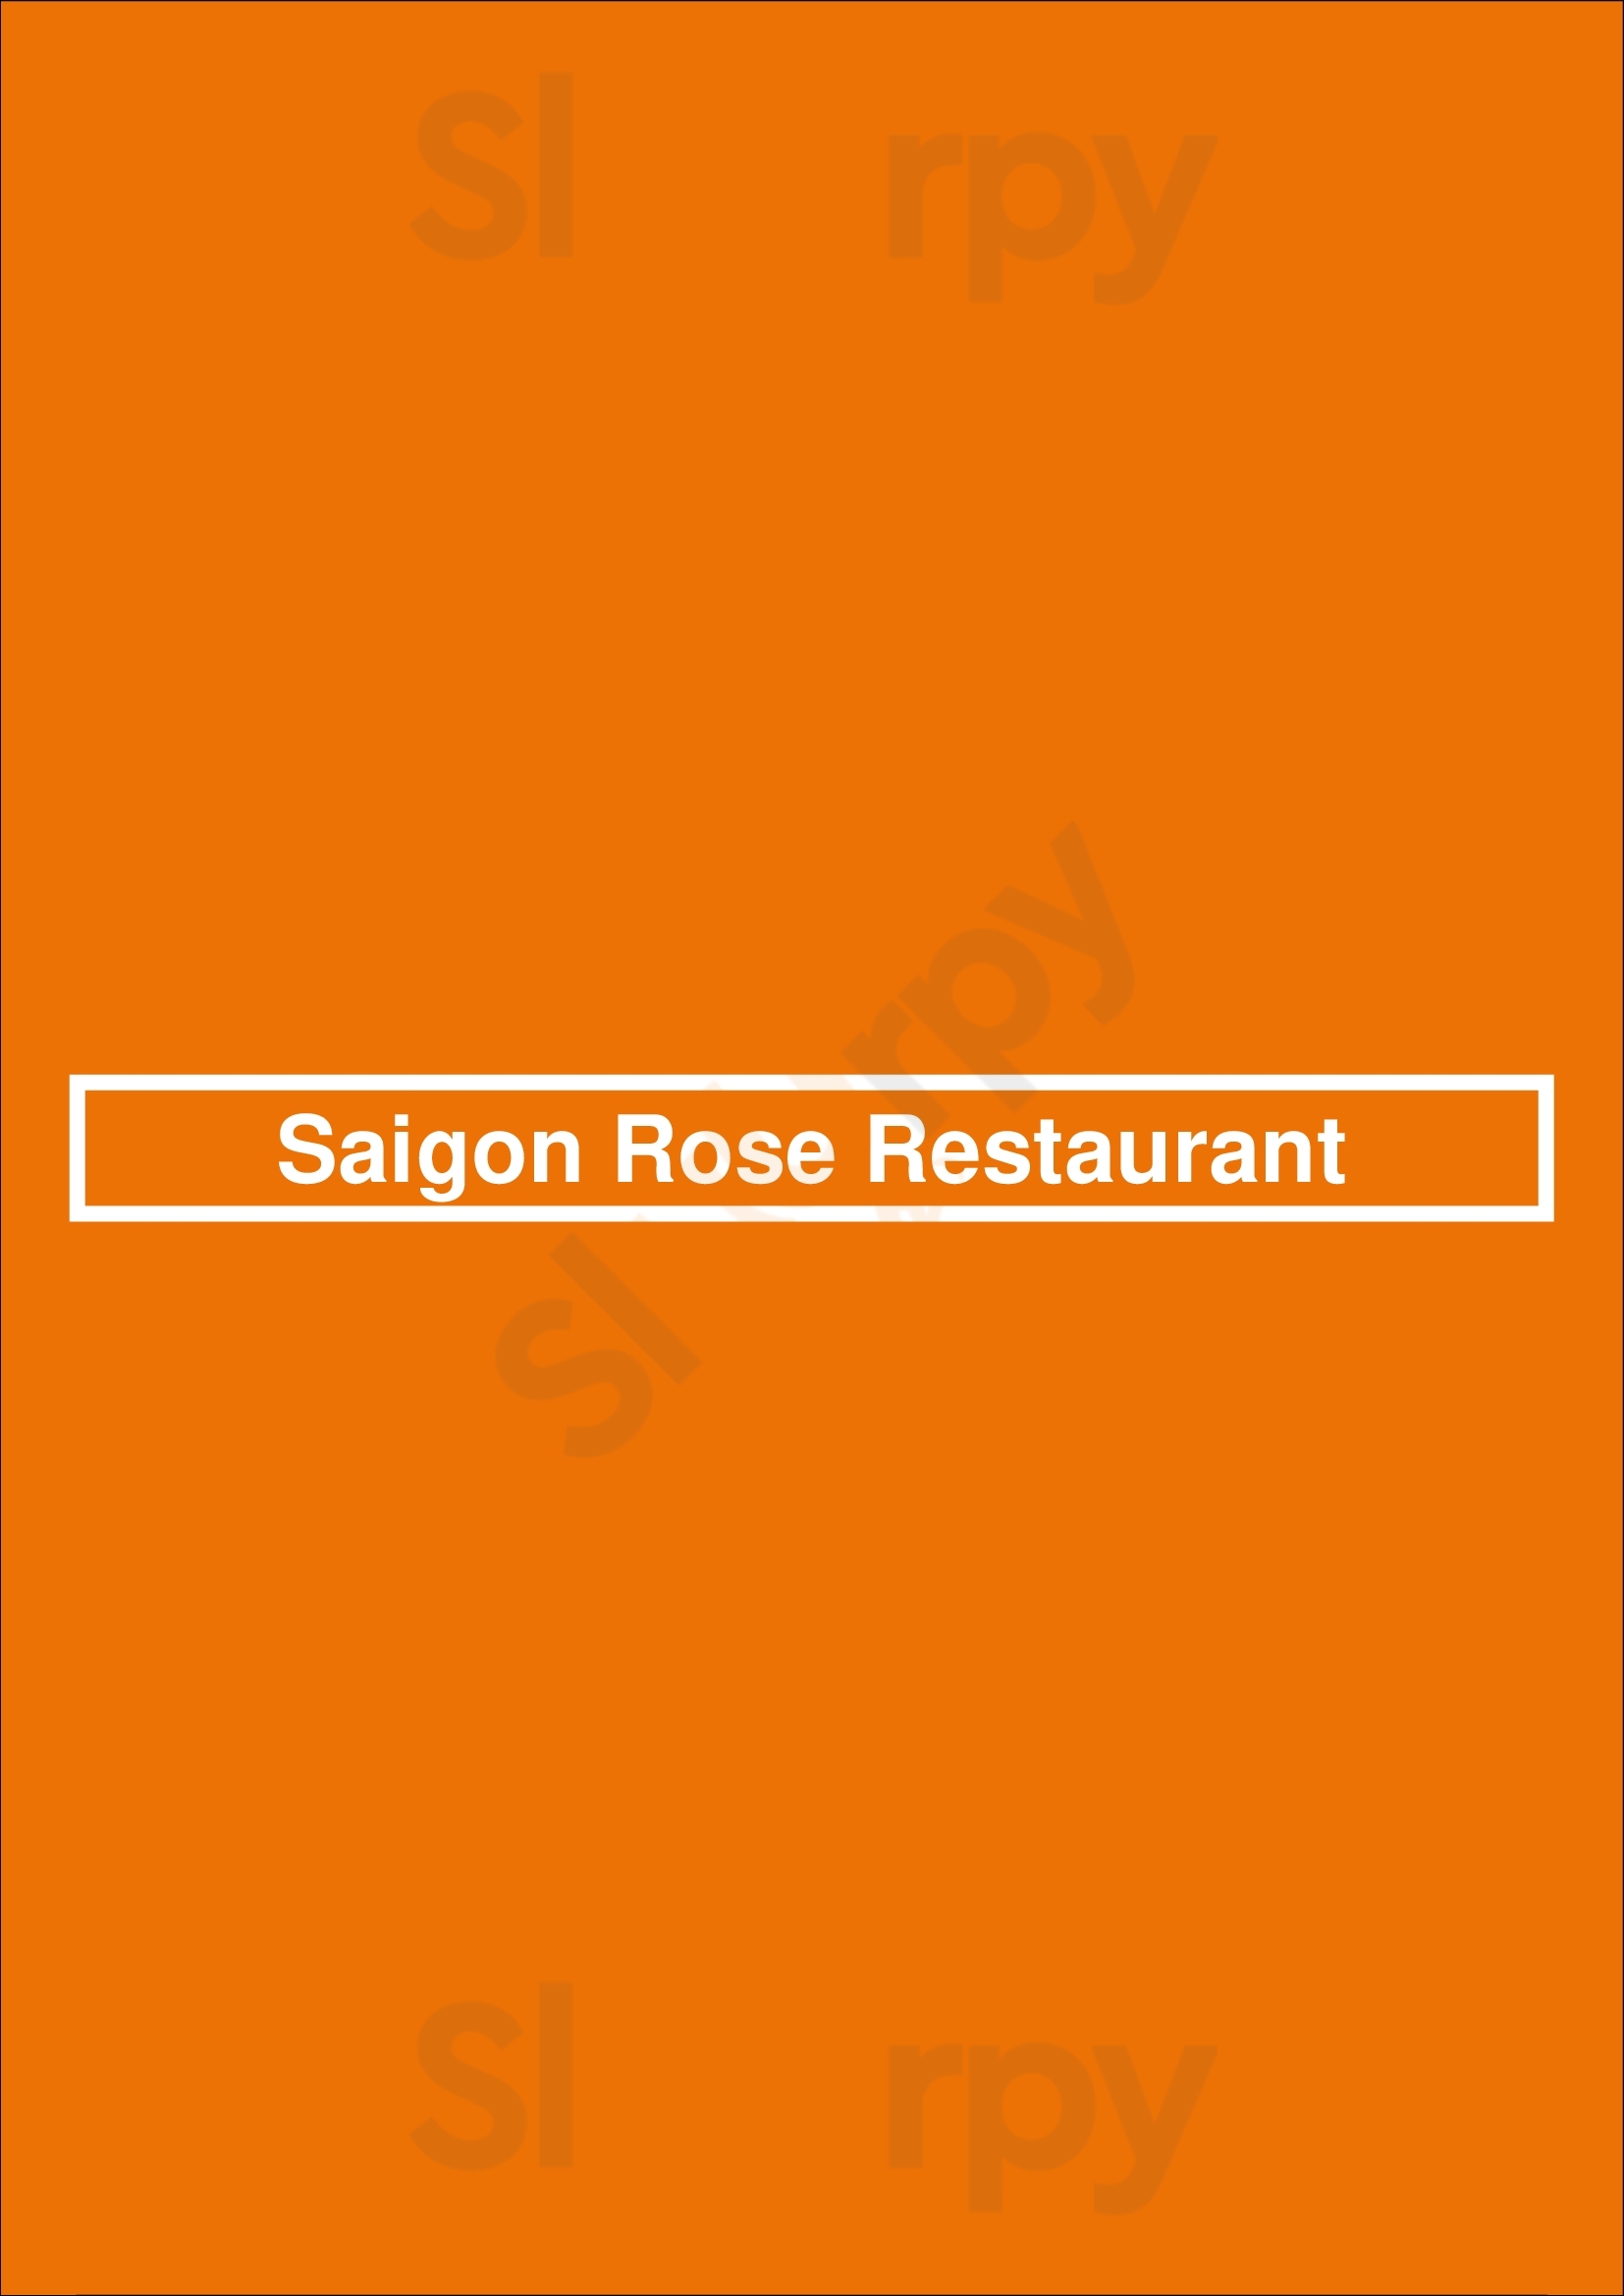 Saigon Rose Restaurant Saskatoon Menu - 1